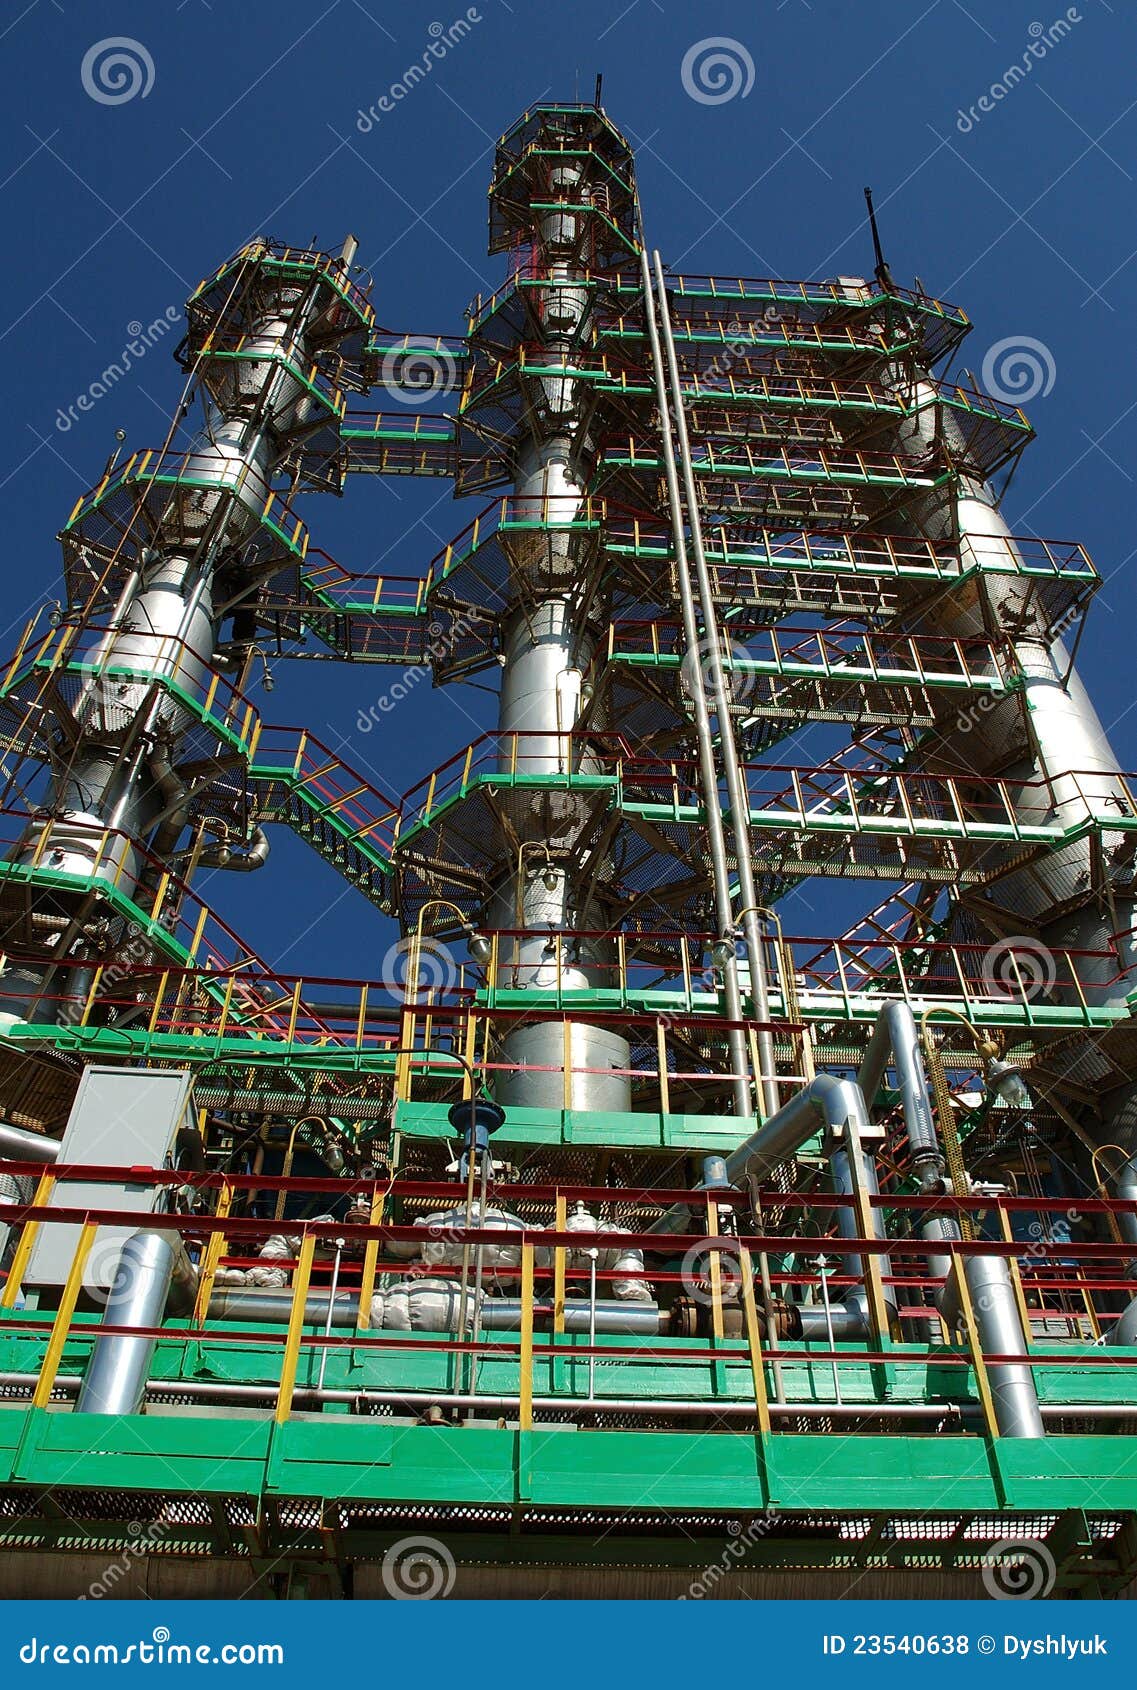 russian oil refining industry